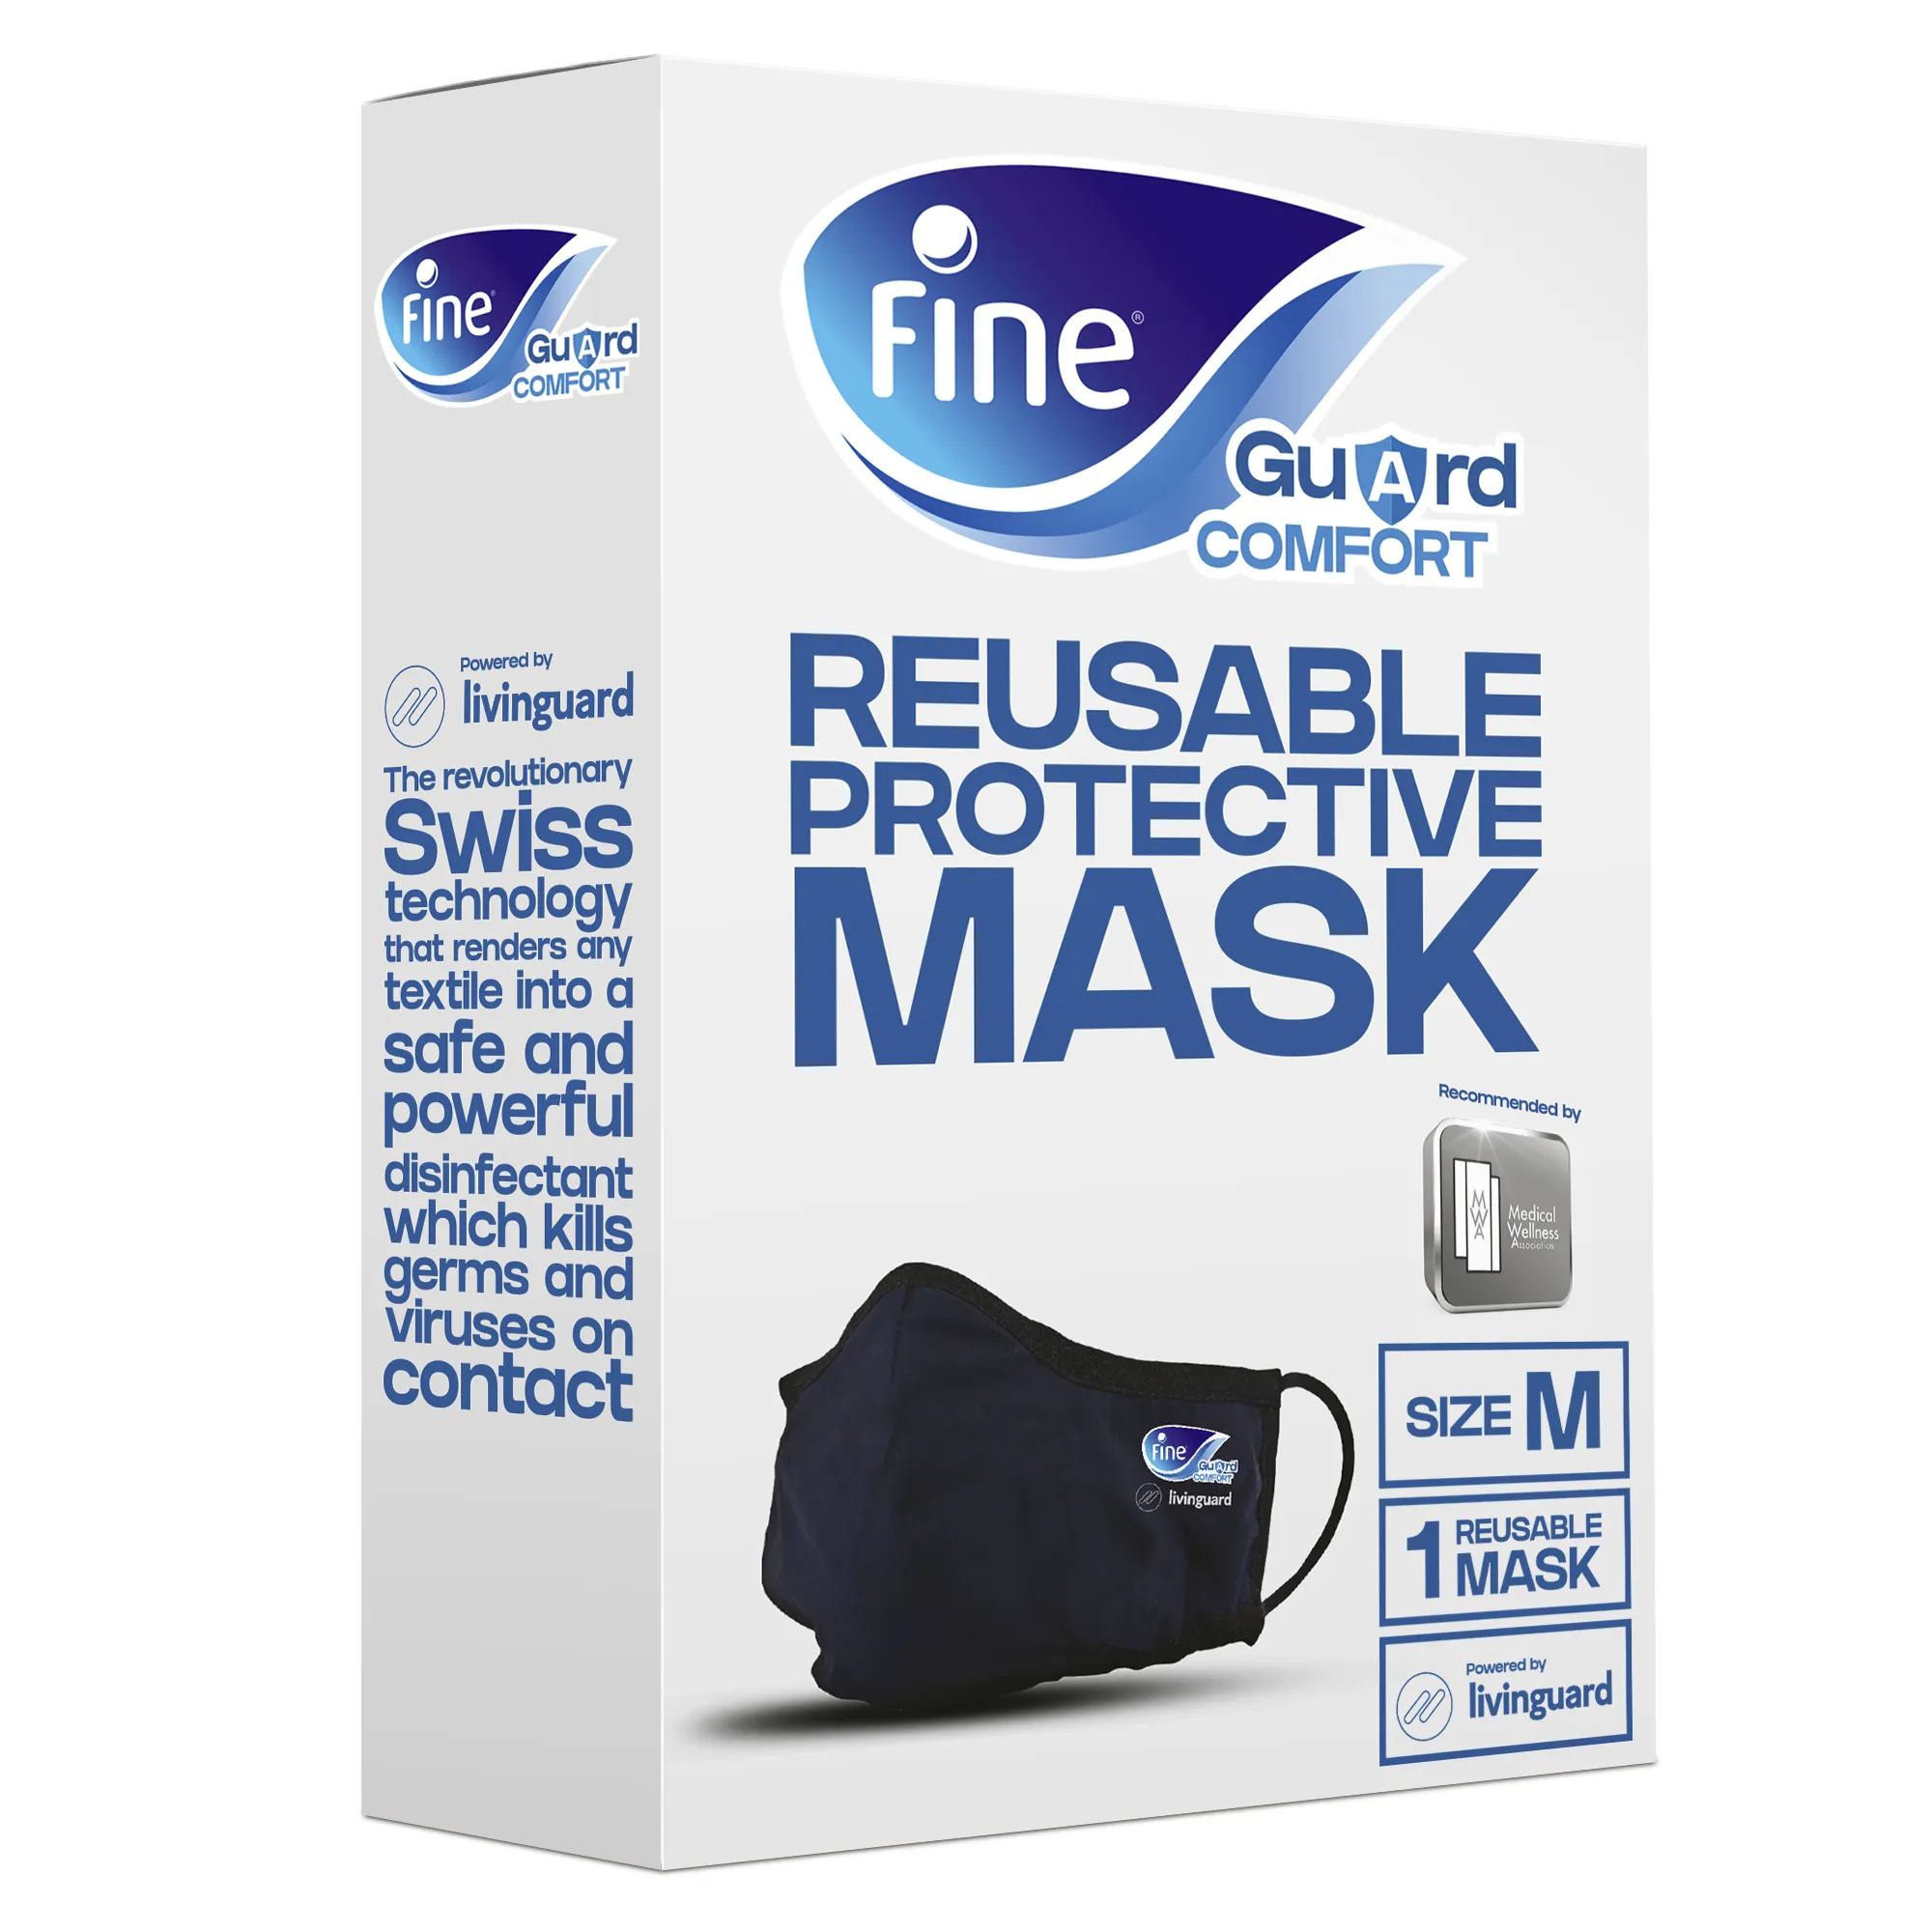 Fine Guard Comfort Adult Face Mask with virus-killing Livinguard Technology, Size Medium